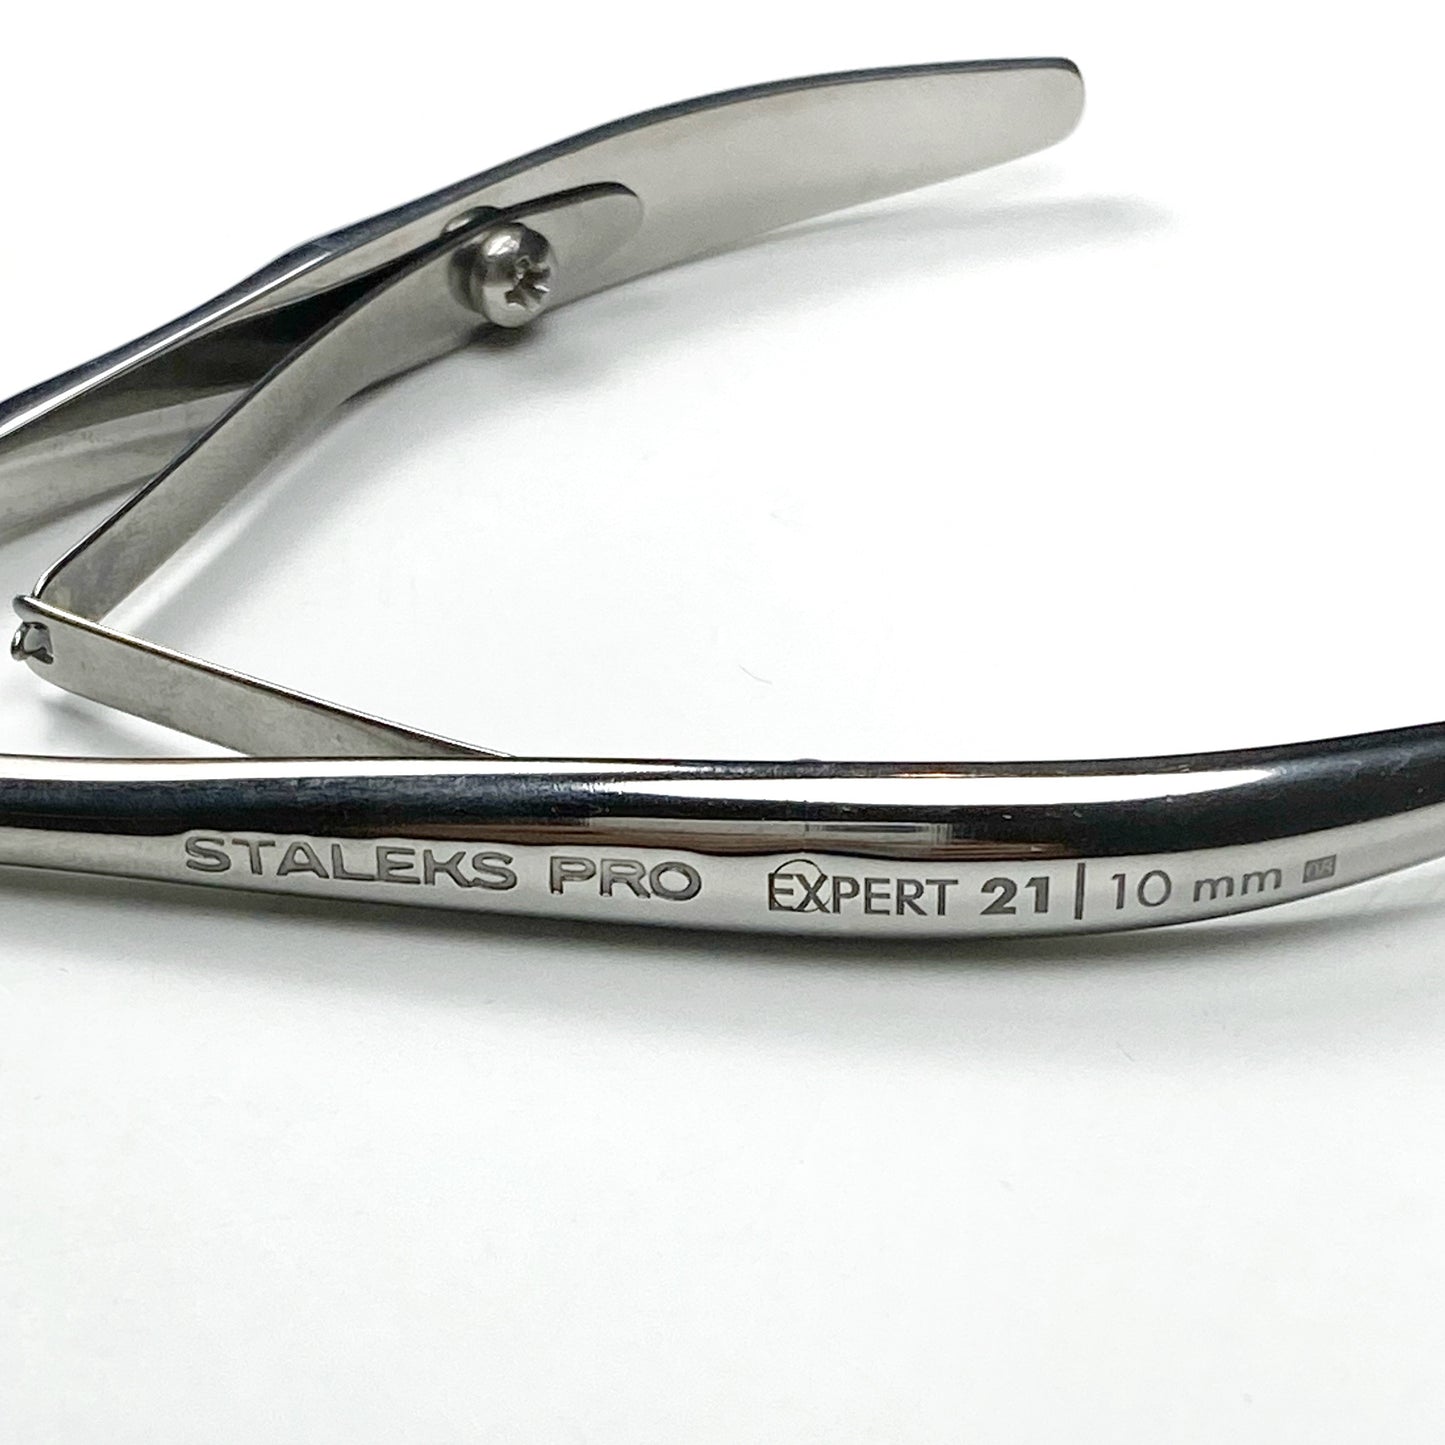 STALEKS PRO Expert Cuticle Nippers, model NE-21-10 (10mm edge)